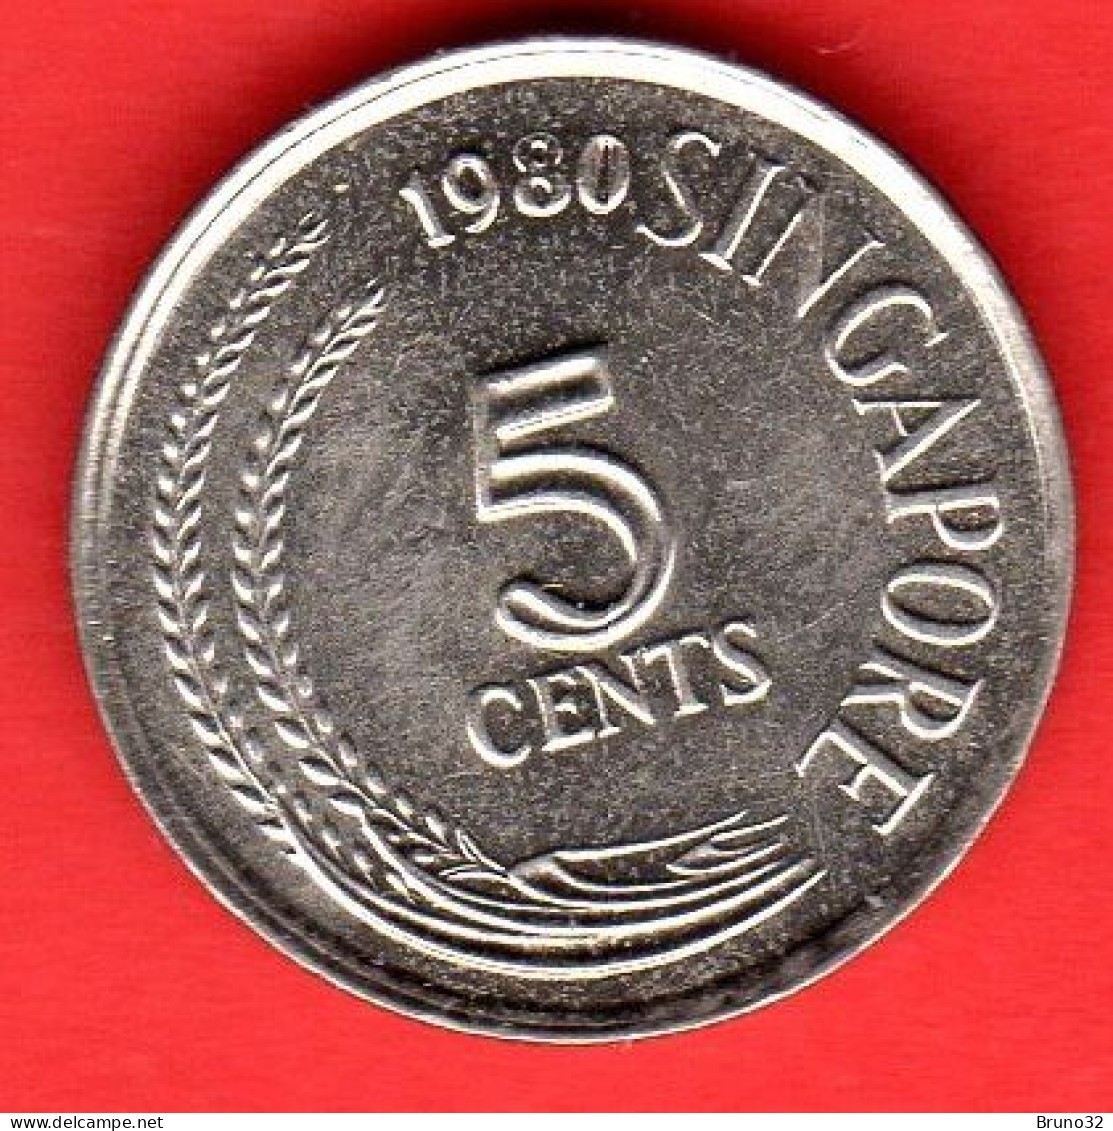 SINGAPORE - Singapura - 1980 - 5 Cents - QFDC/aUNC - Come Da Foto - Singapur